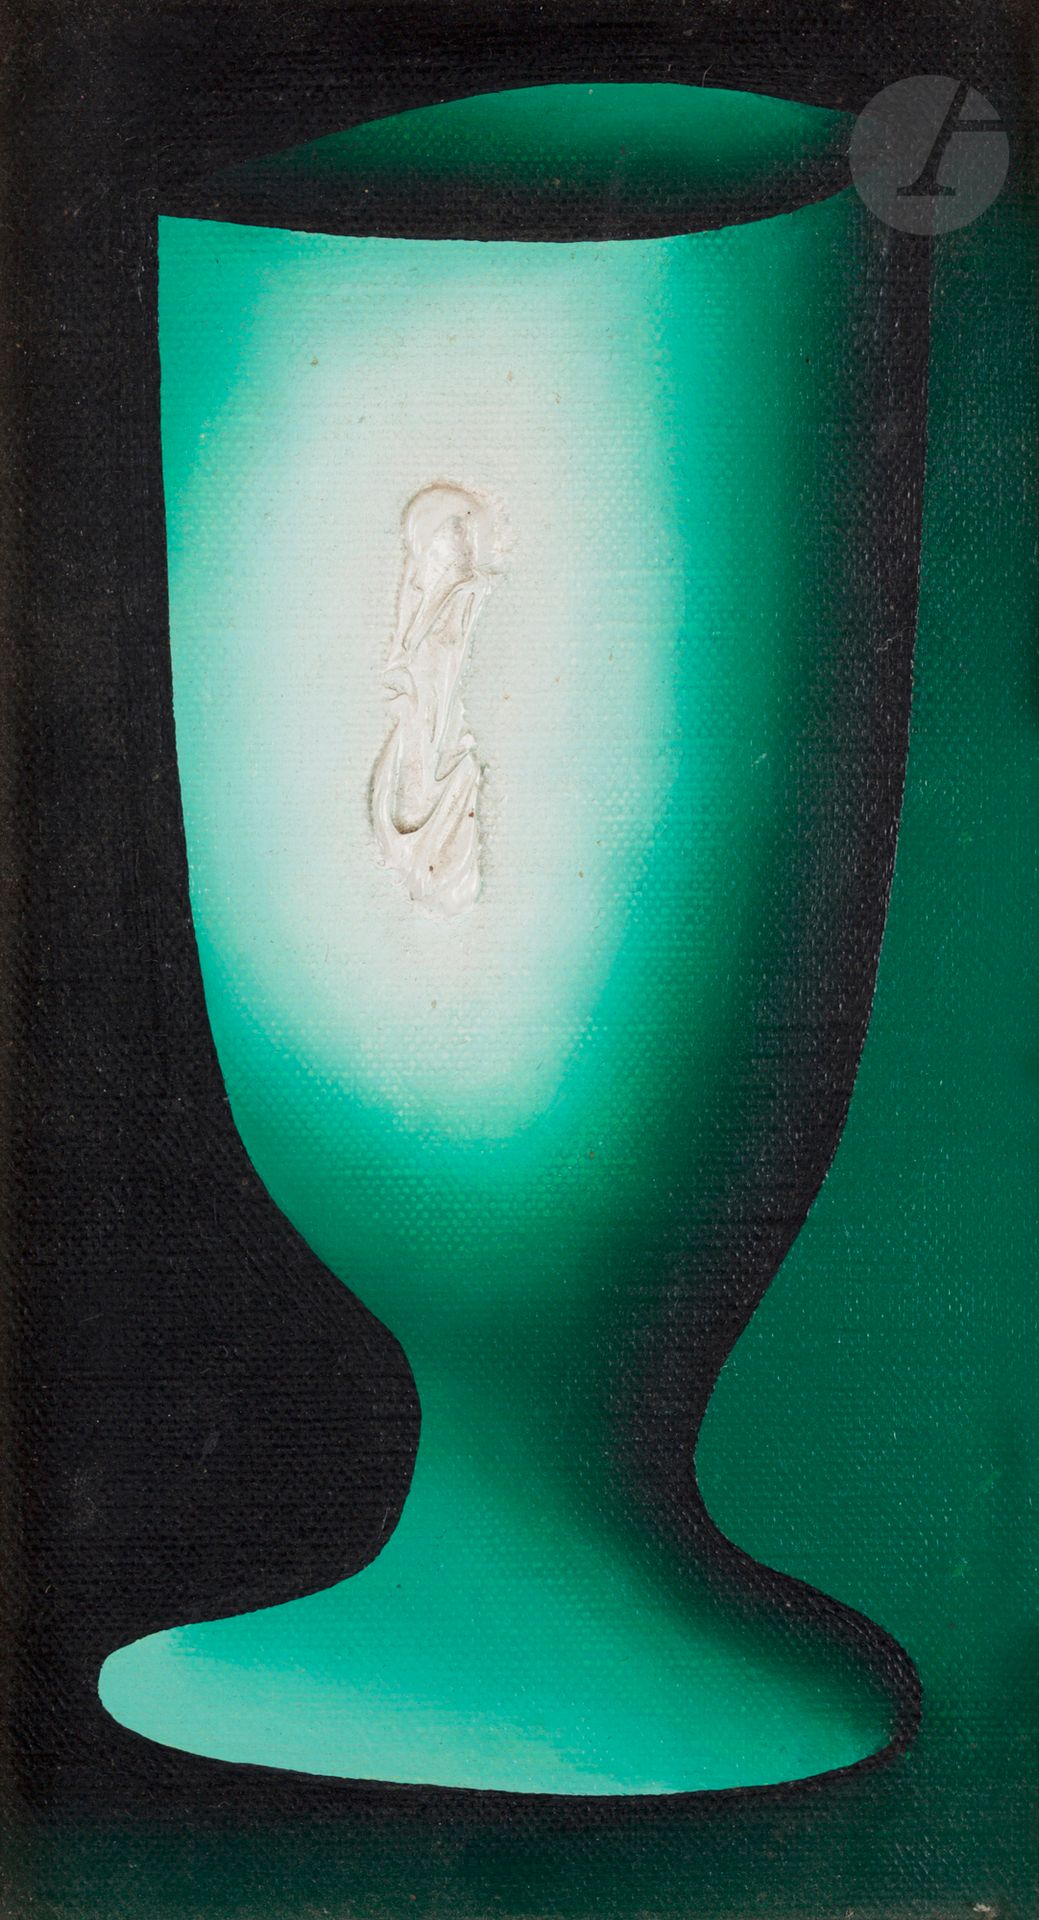 Null 奥列格-策尔科夫[俄语]（1934-2021年）
Wineglass, 1991
布面油画。
背面有签名、日期和奉献。
22 x 12 cm